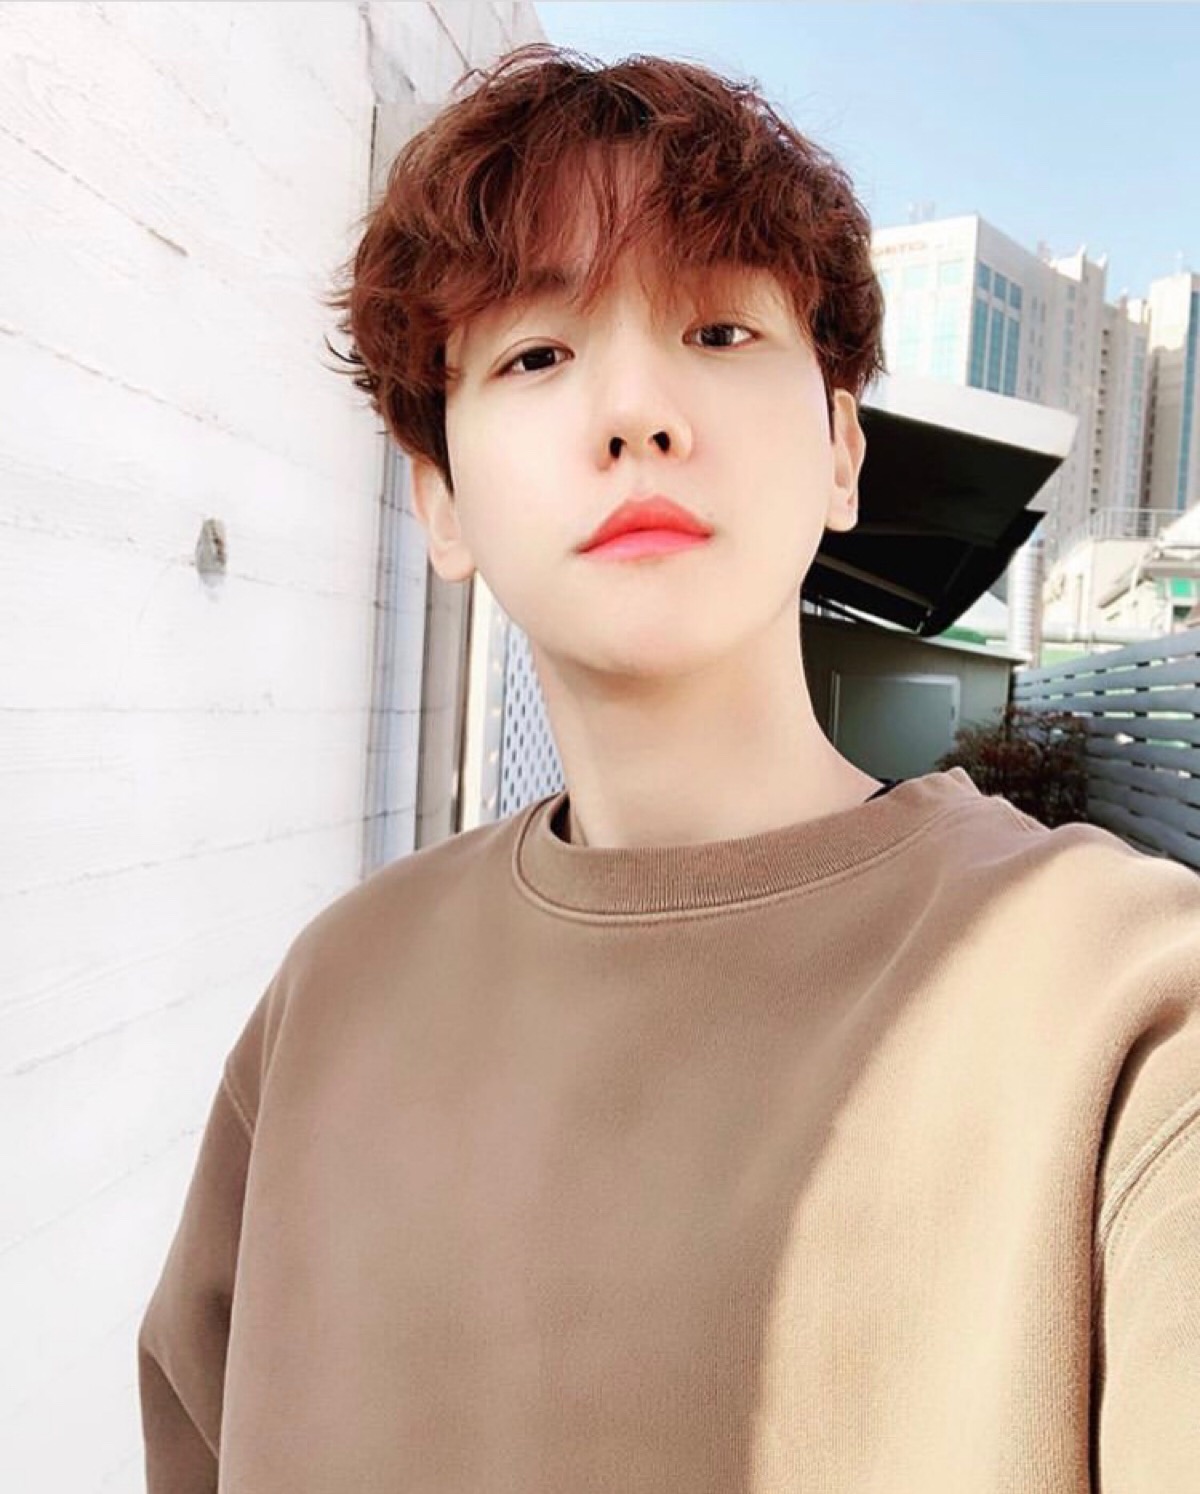 边伯贤 exo baekhyun instagram post 2019.02.14!